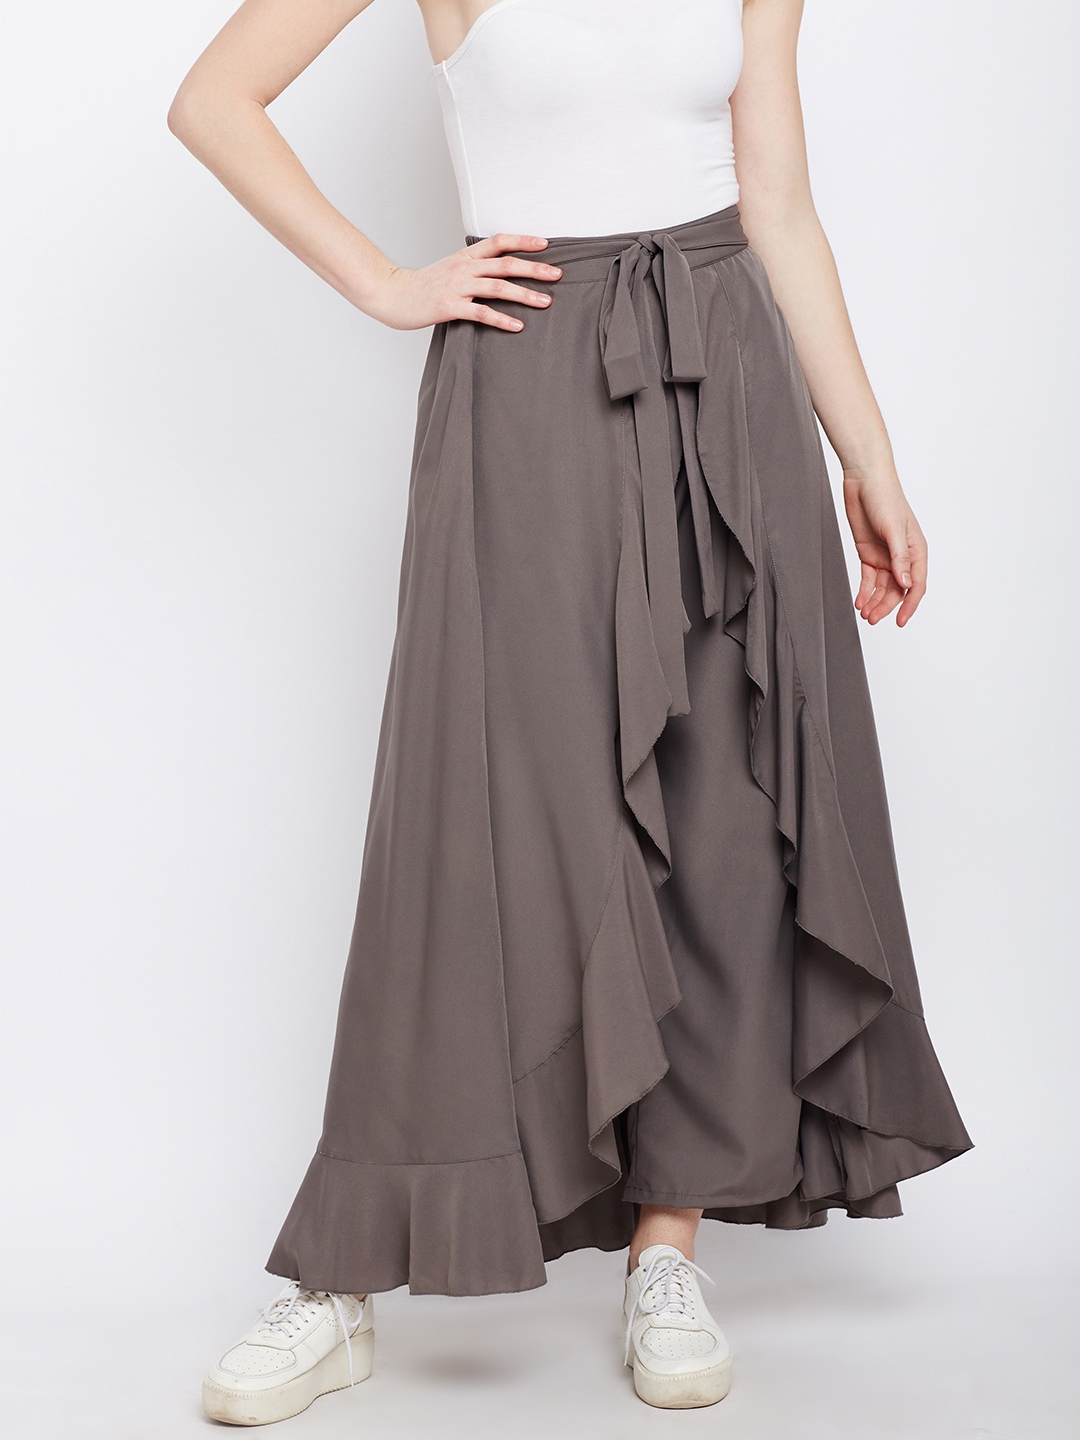 Skirts  Buy Short Mini  Long Skirts Online for Women at Myntra